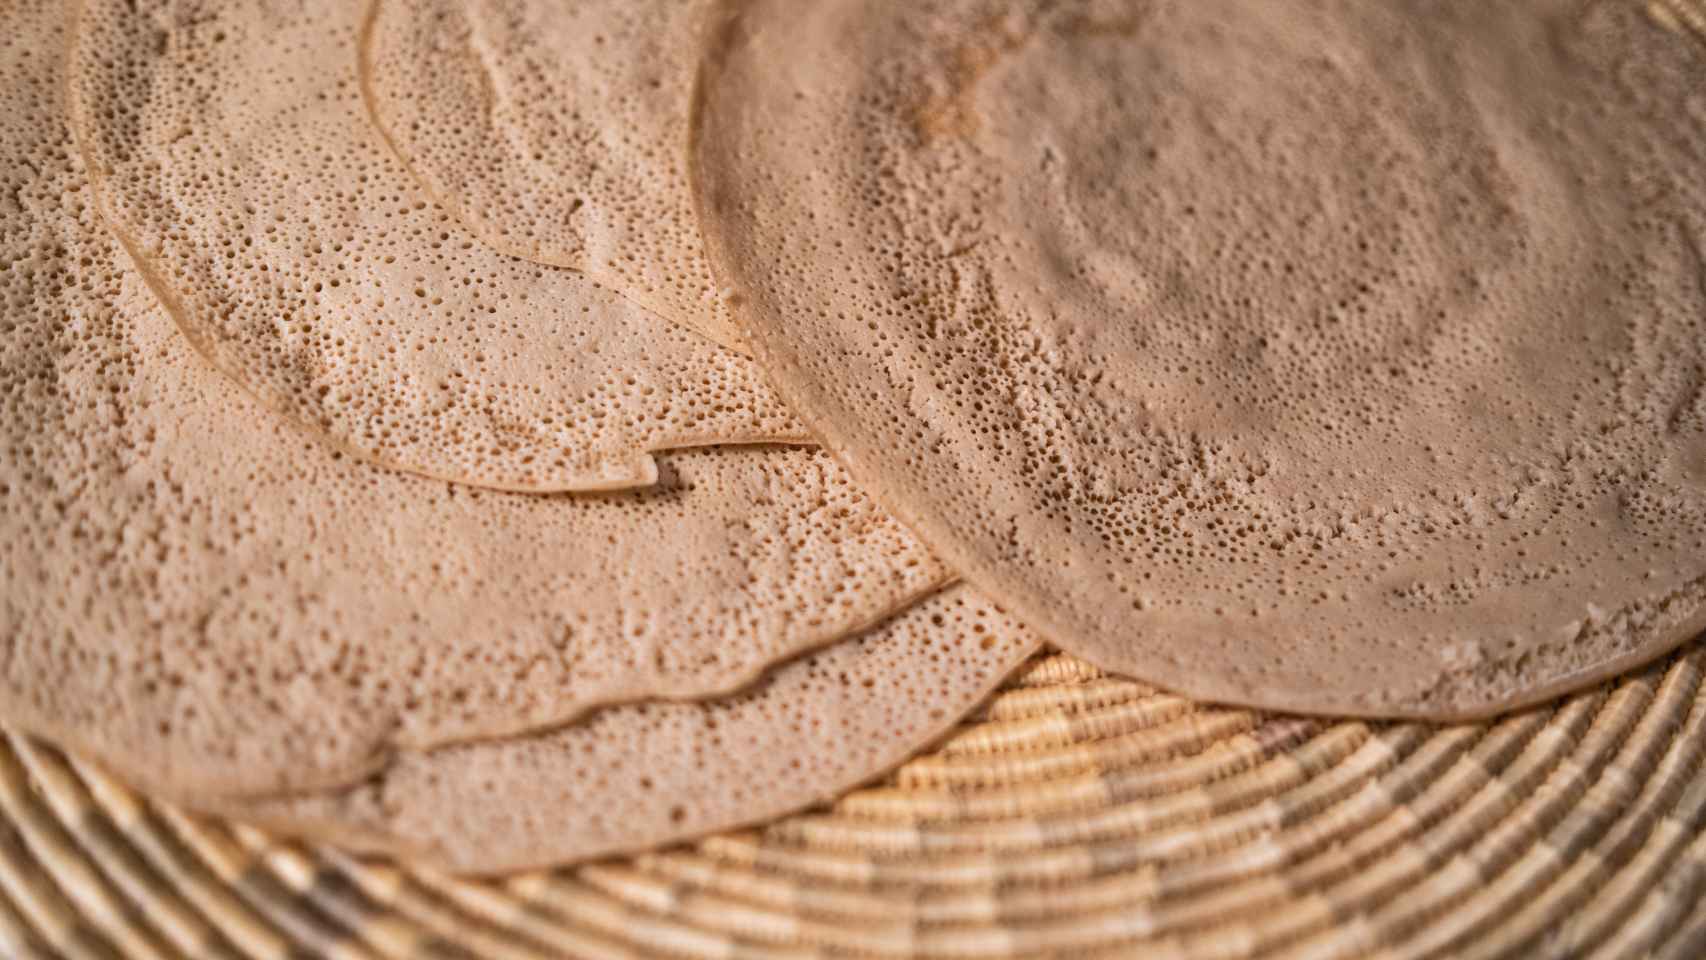 Tradicionalmente se ha utilizado para producir injera, un pan que se asemeja a una tortita.